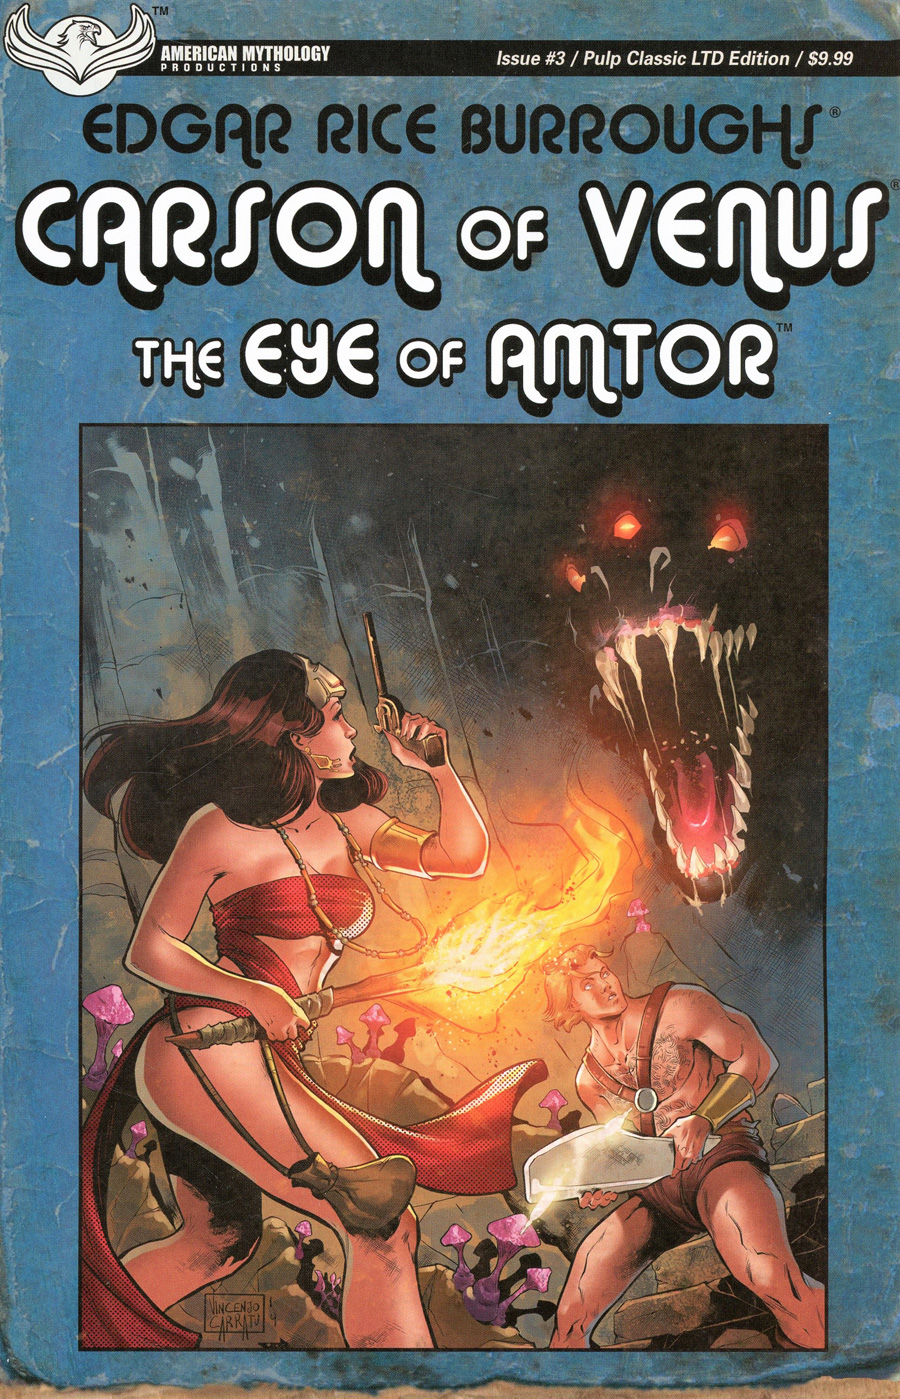 Carson Of Venus Eye Of Amtor #3 Cover B Limited Edition Vincenzo Carratu Pulp Cover